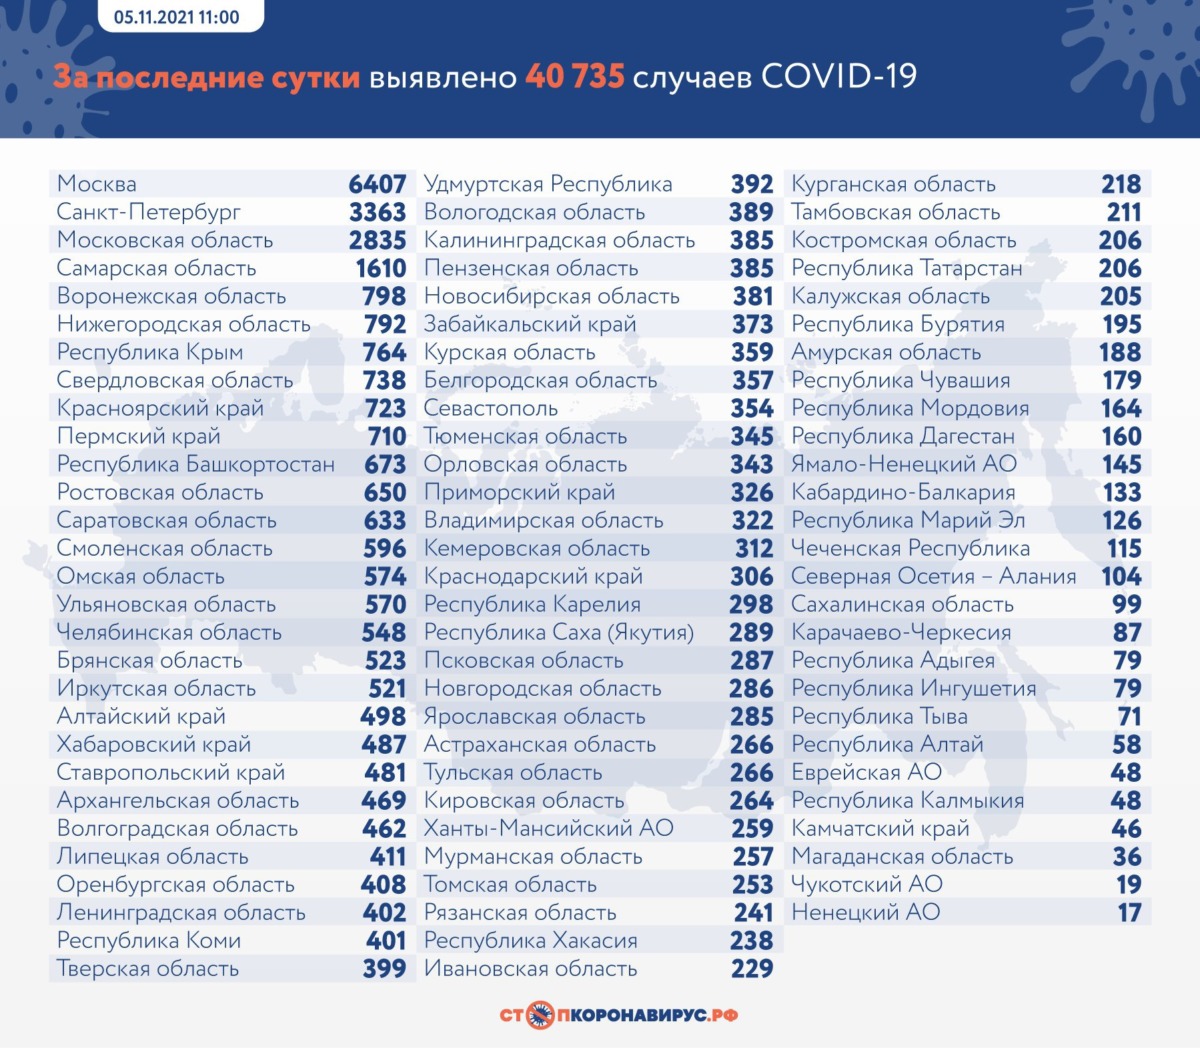 Статистика коронавируса в России на 5 ноября